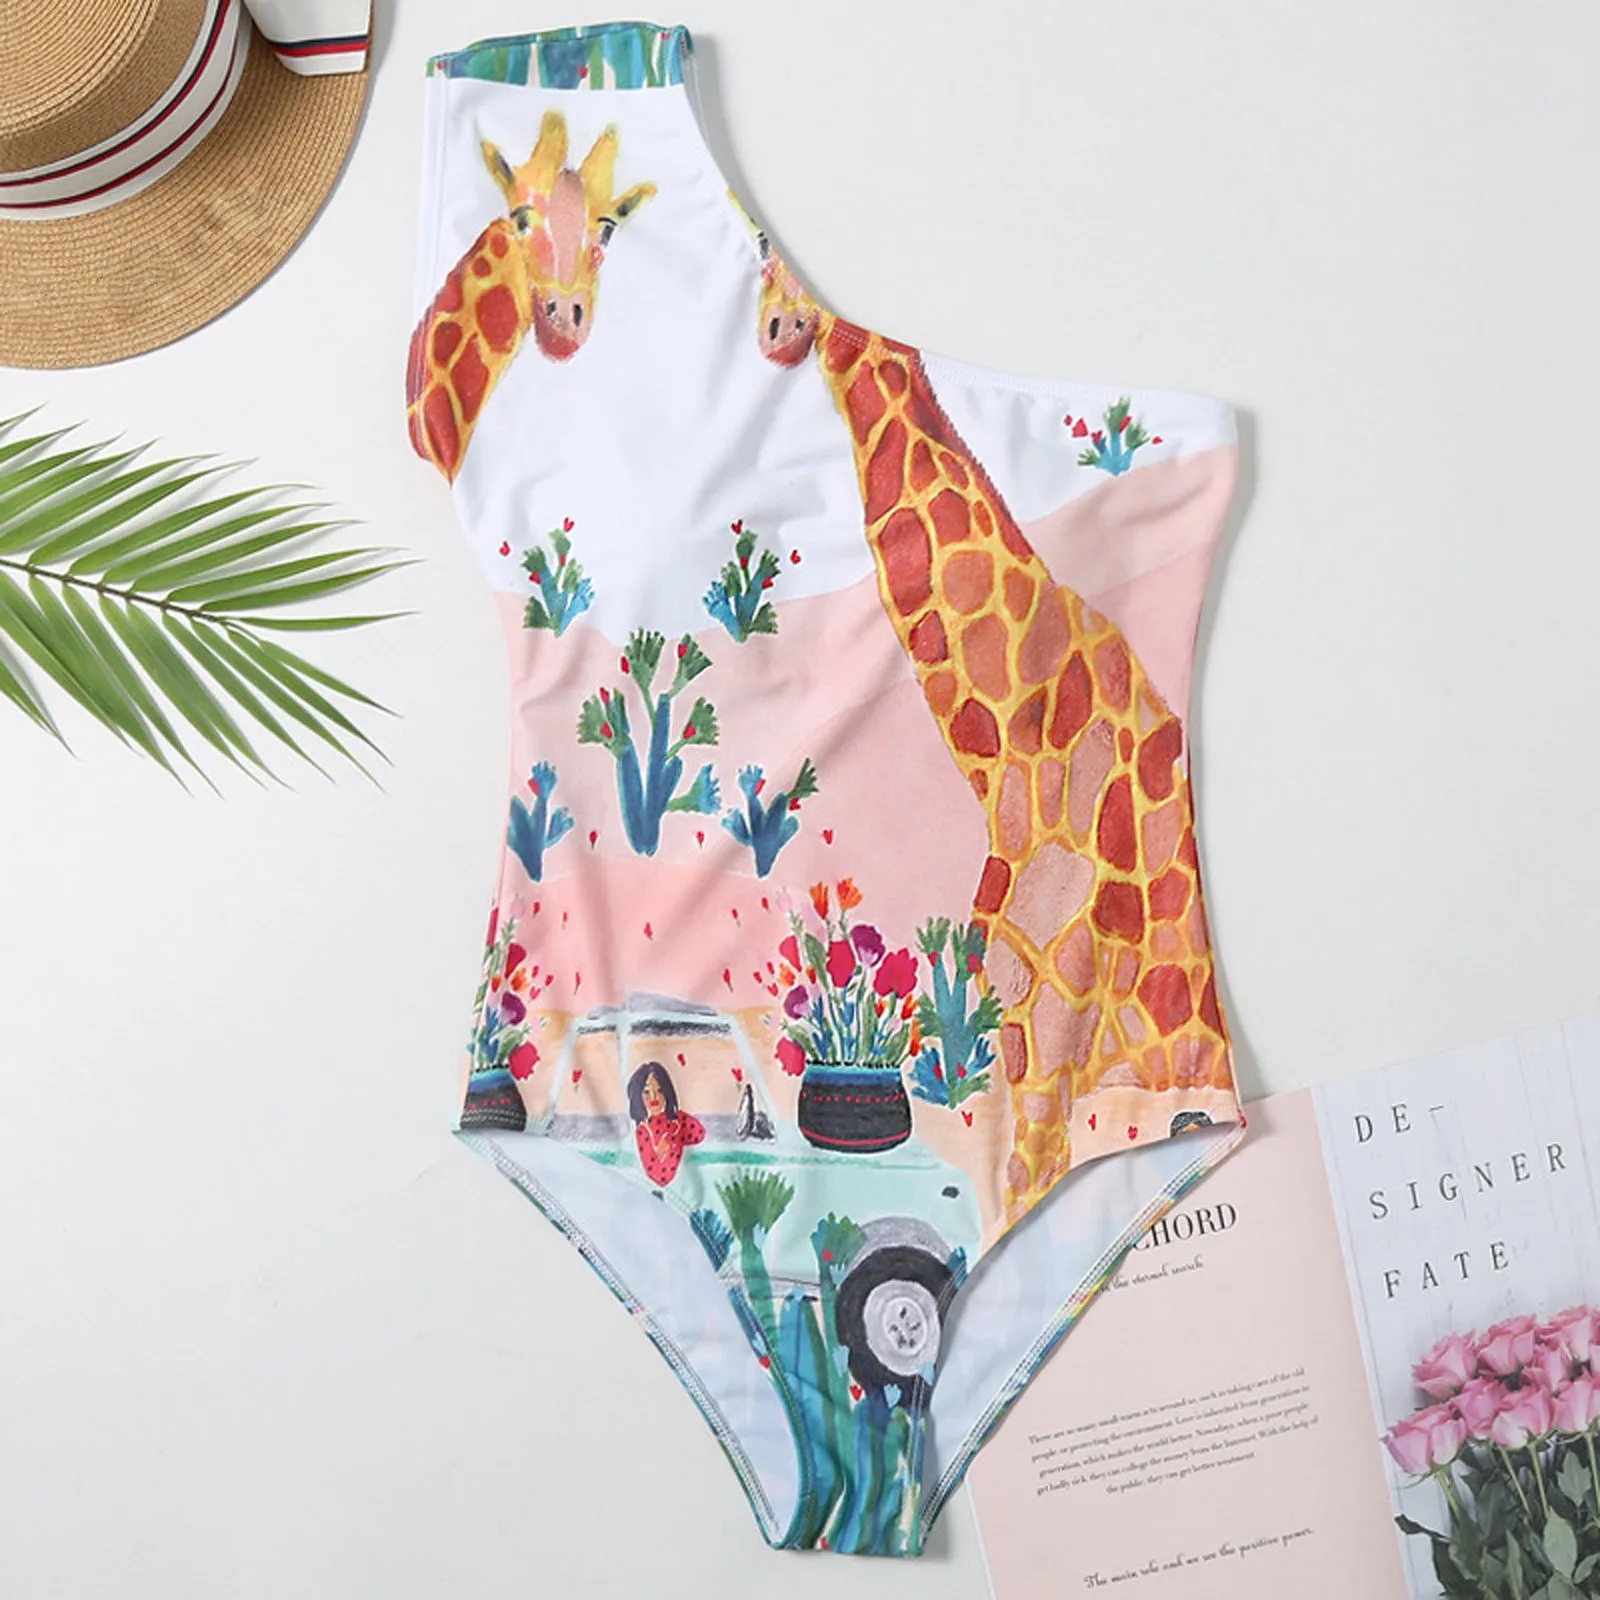 

Sagace slim leisure spa bathing suit fashion personalized printing sexy Swimsuit bikini women's swimsuit bikinis 2021 mujer